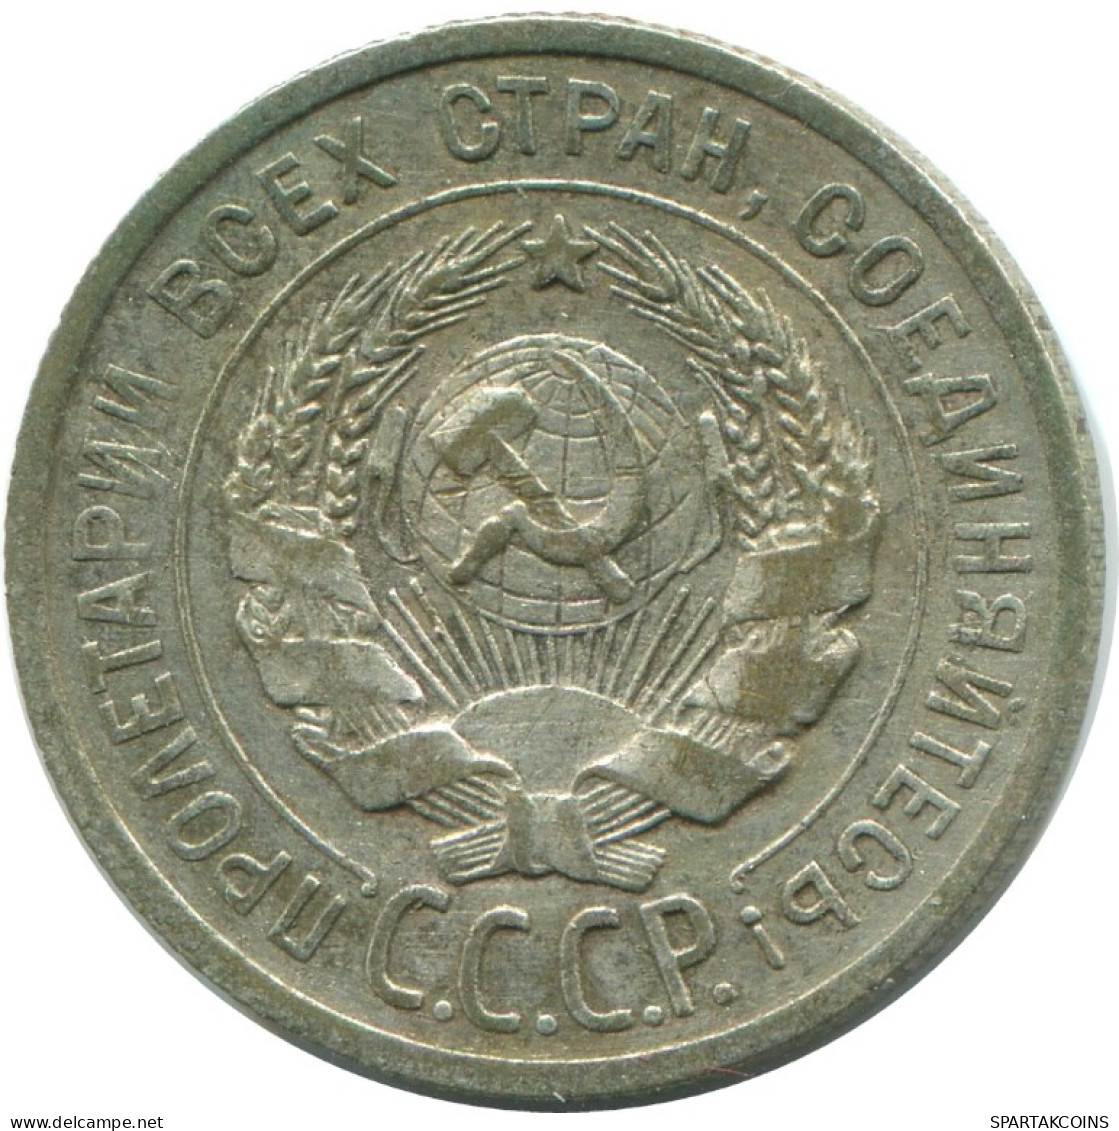 20 KOPEKS 1925 RUSSIA USSR SILVER Coin HIGH GRADE #AF342.4.U.A - Russia